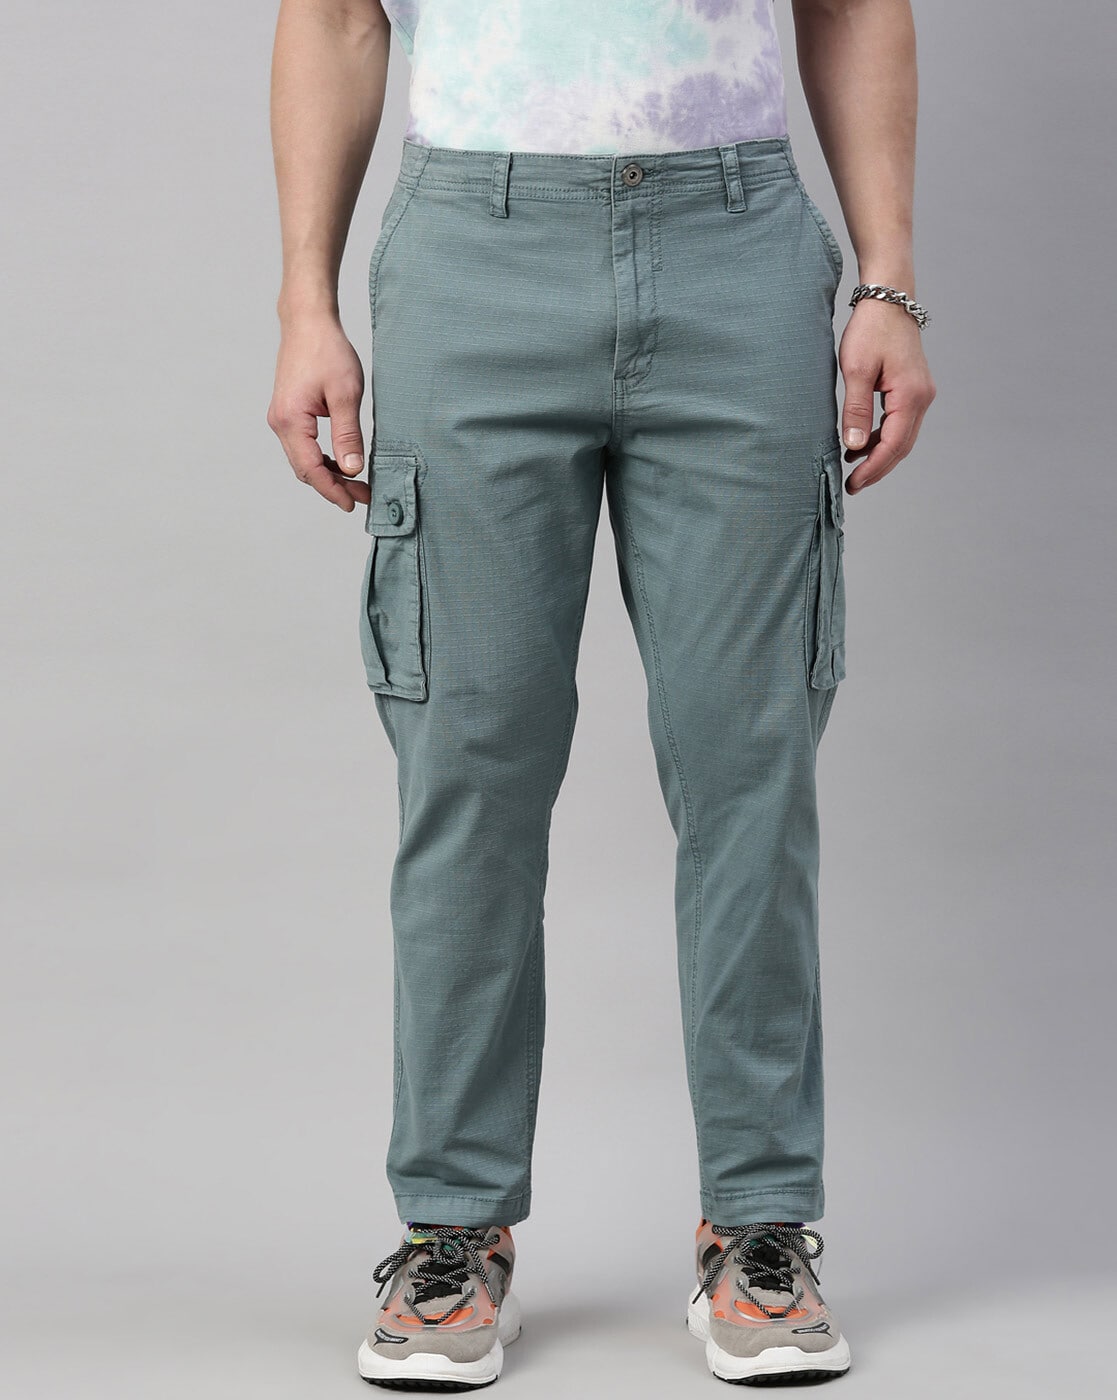 Buy Olive Trousers  Pants for Boys by ZALIO Online  Ajiocom